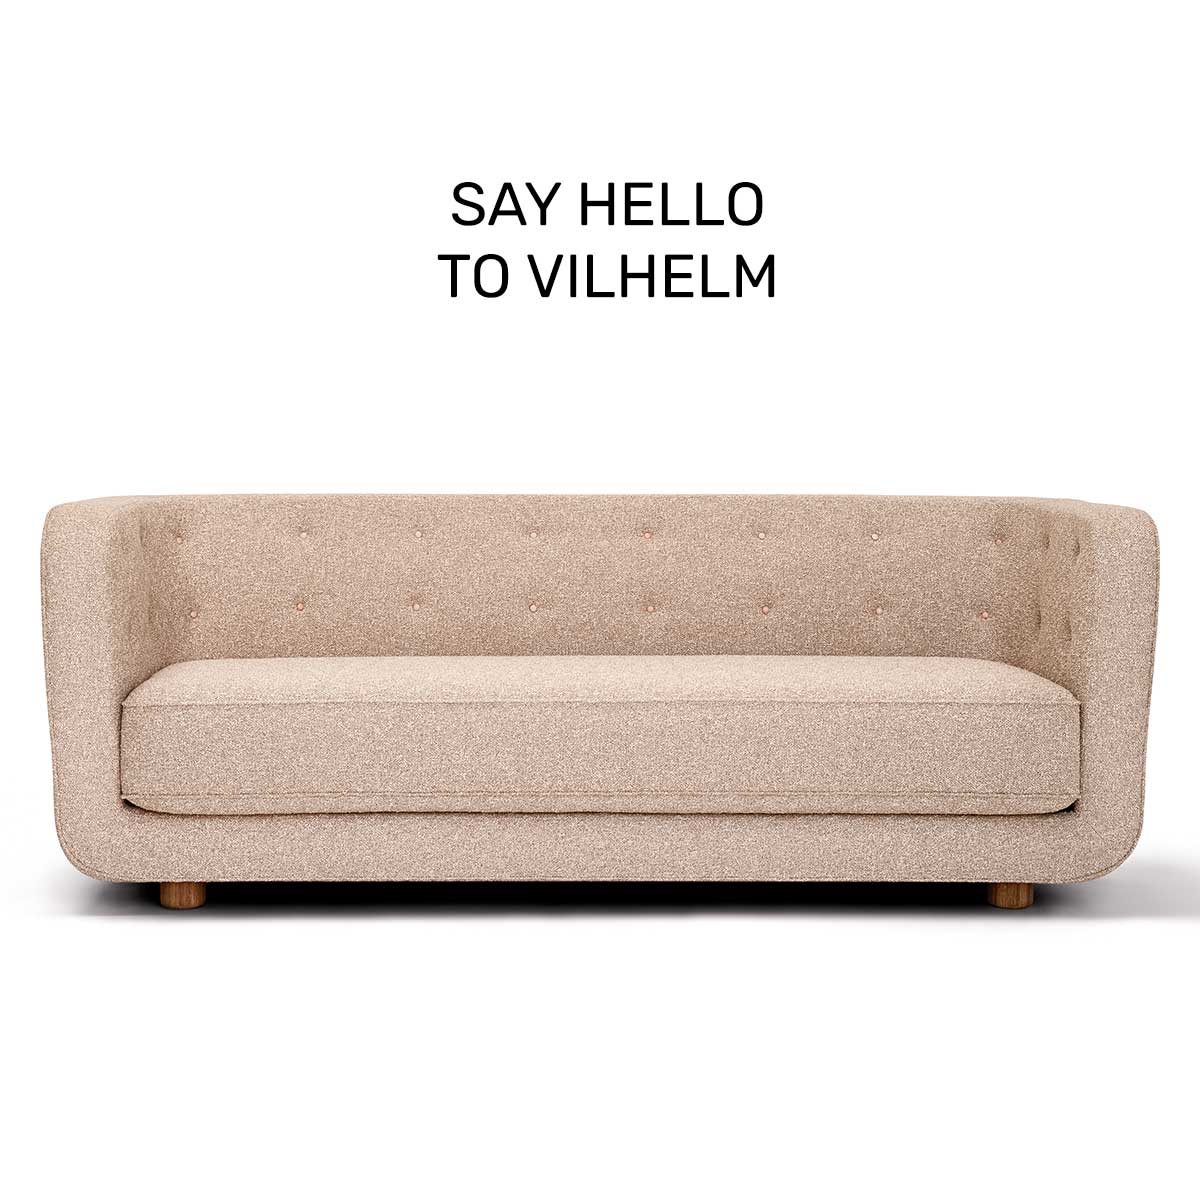 Nye Vilhelm sofa fra by Lassen